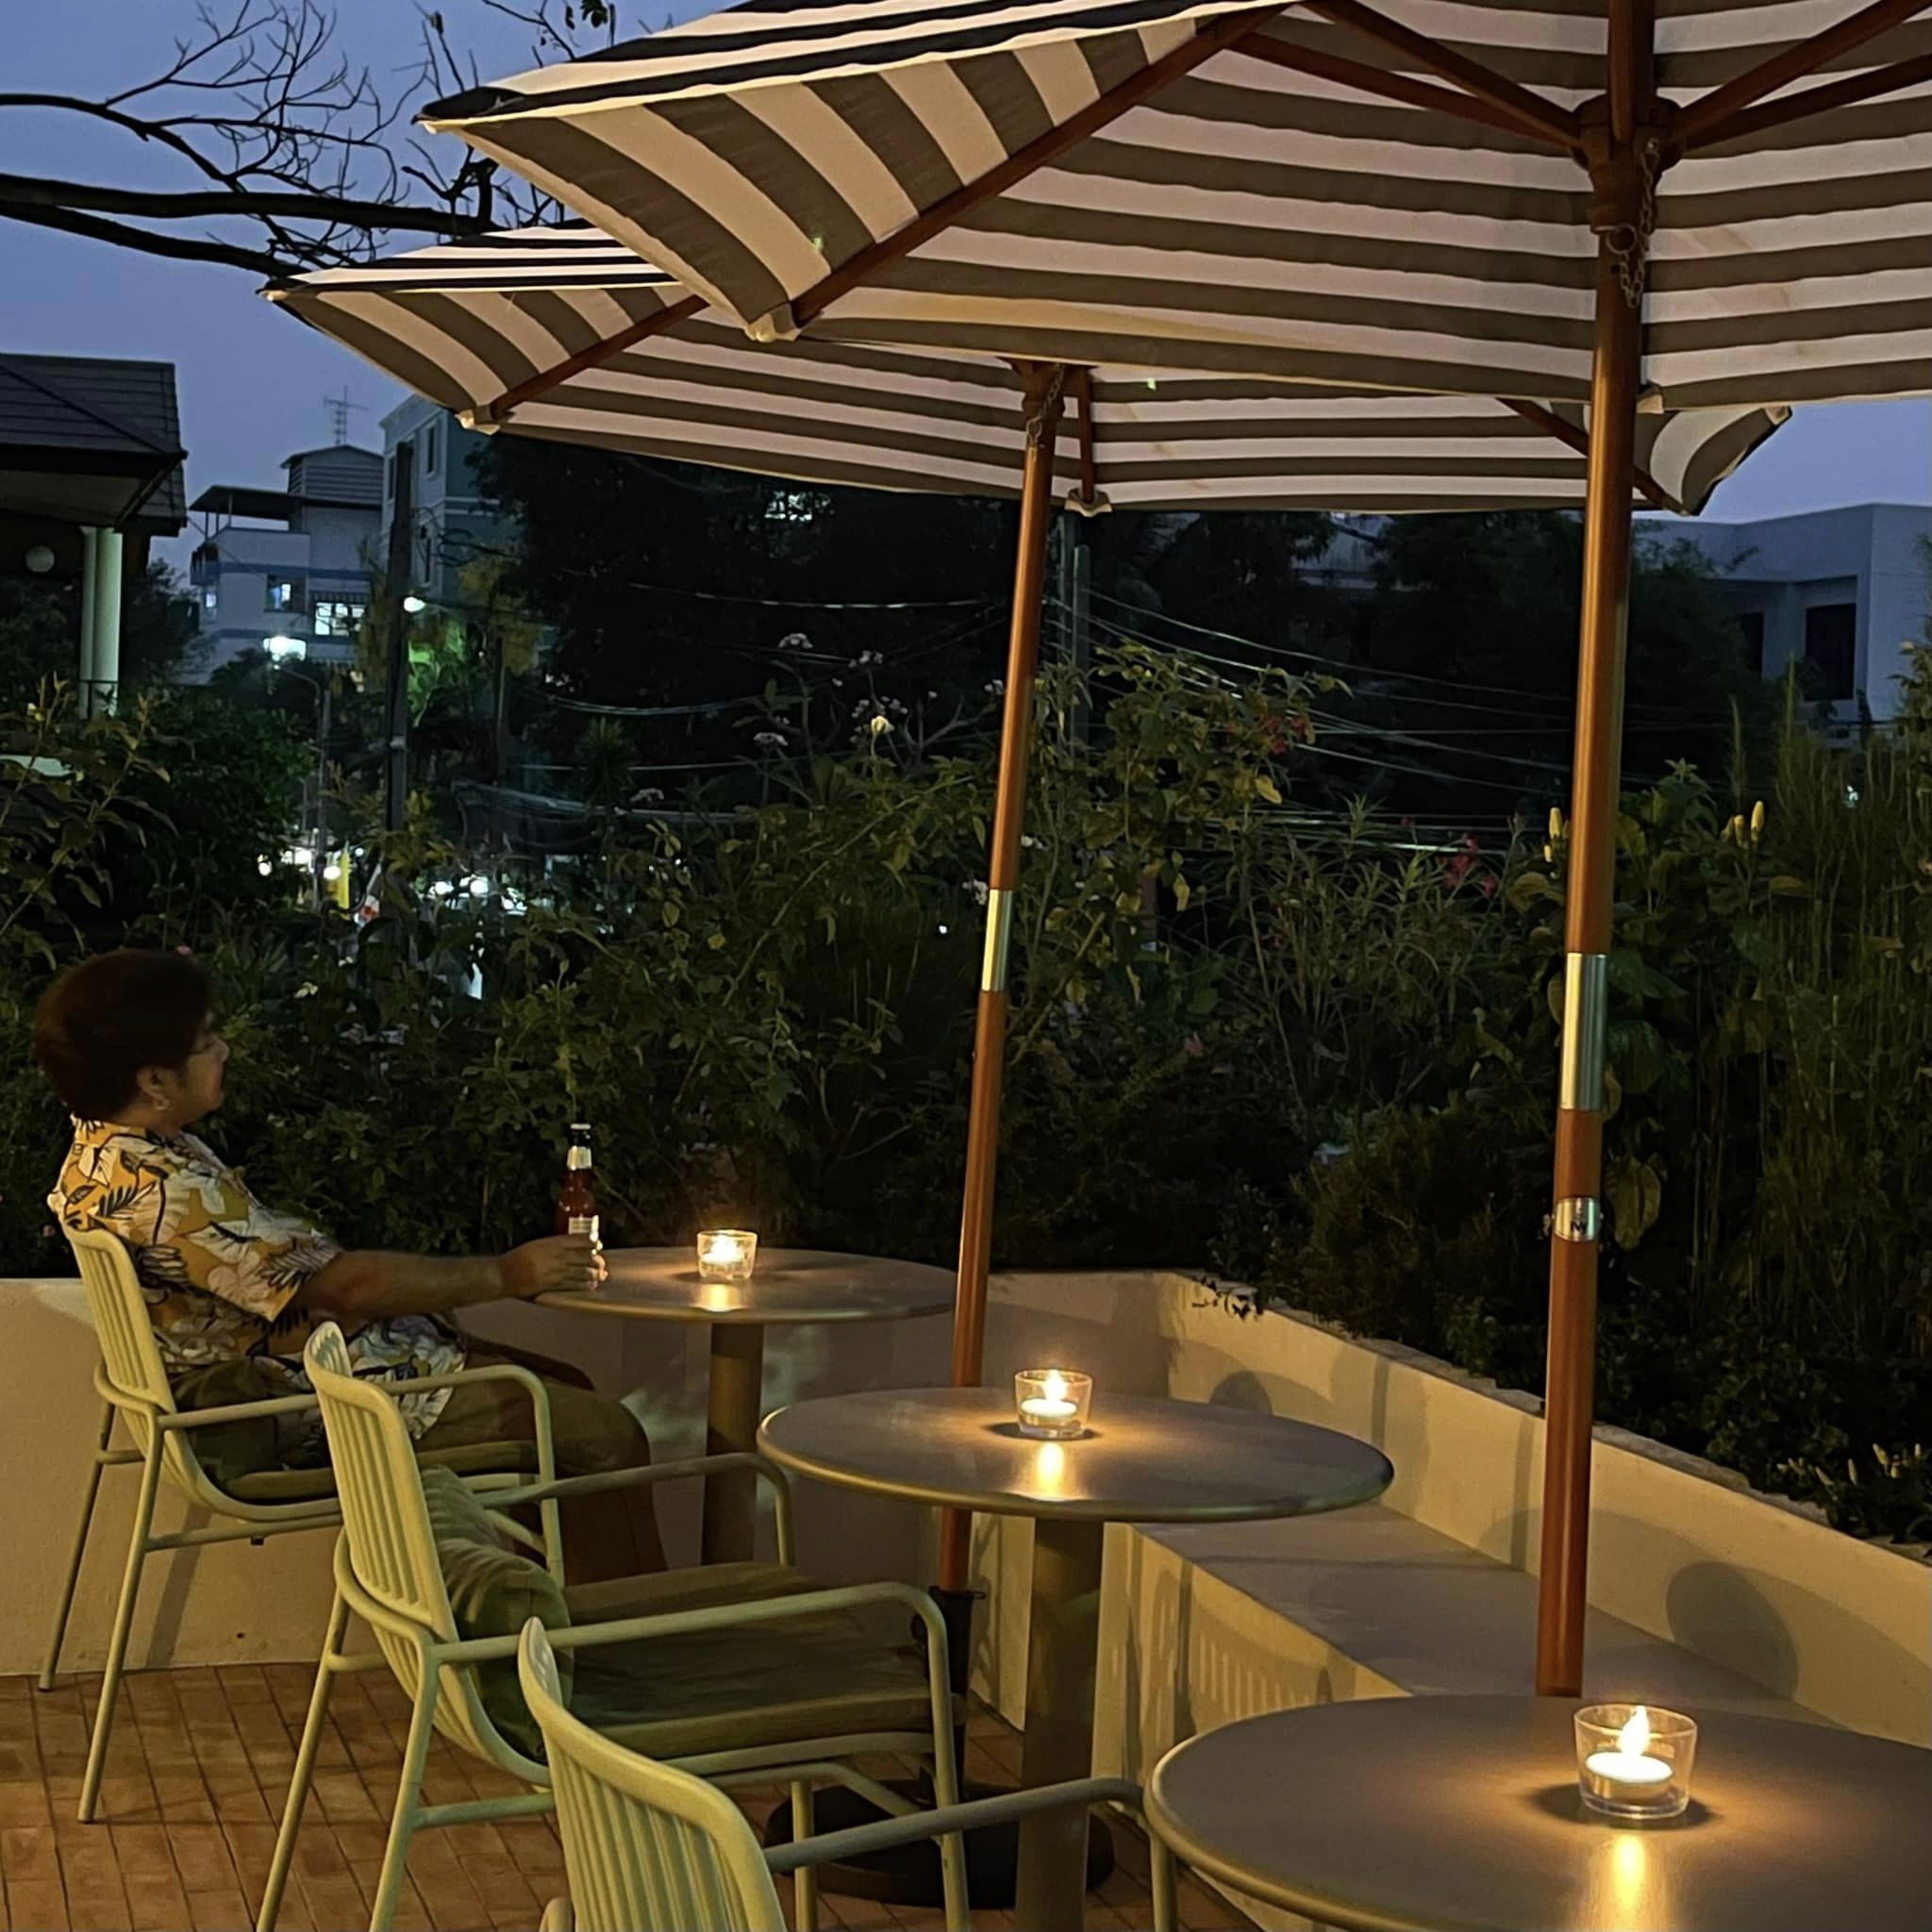 Summer Rain Cafe & Casual Dining (Summer Rain Cafe & Casual Dining) : กรุงเทพมหานคร (Bangkok)